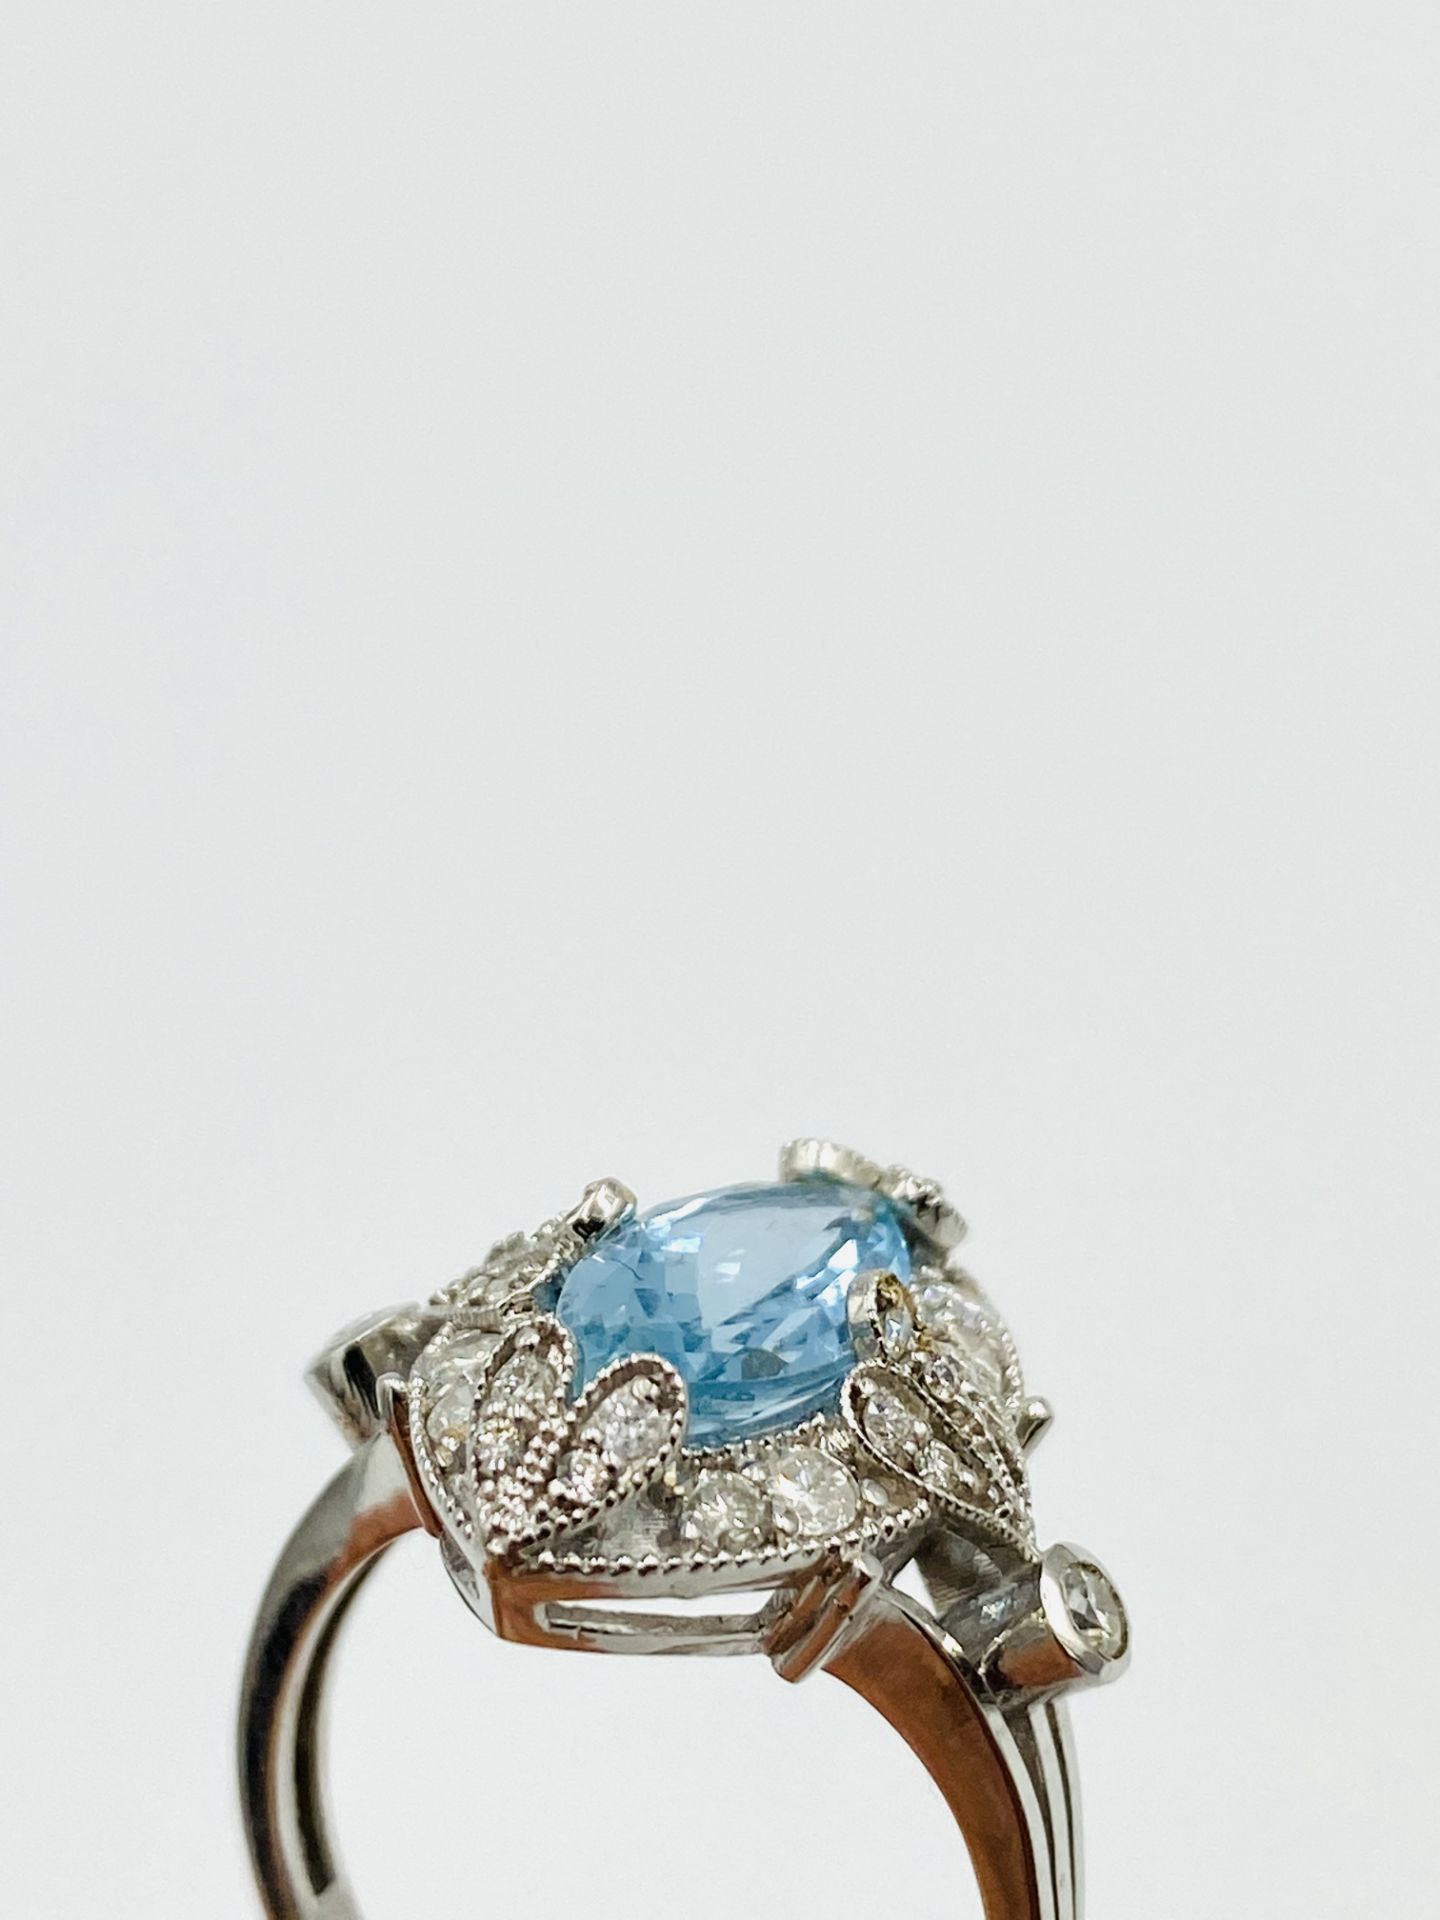 I8ct white gold, aquamarine and diamond ring - Image 6 of 7